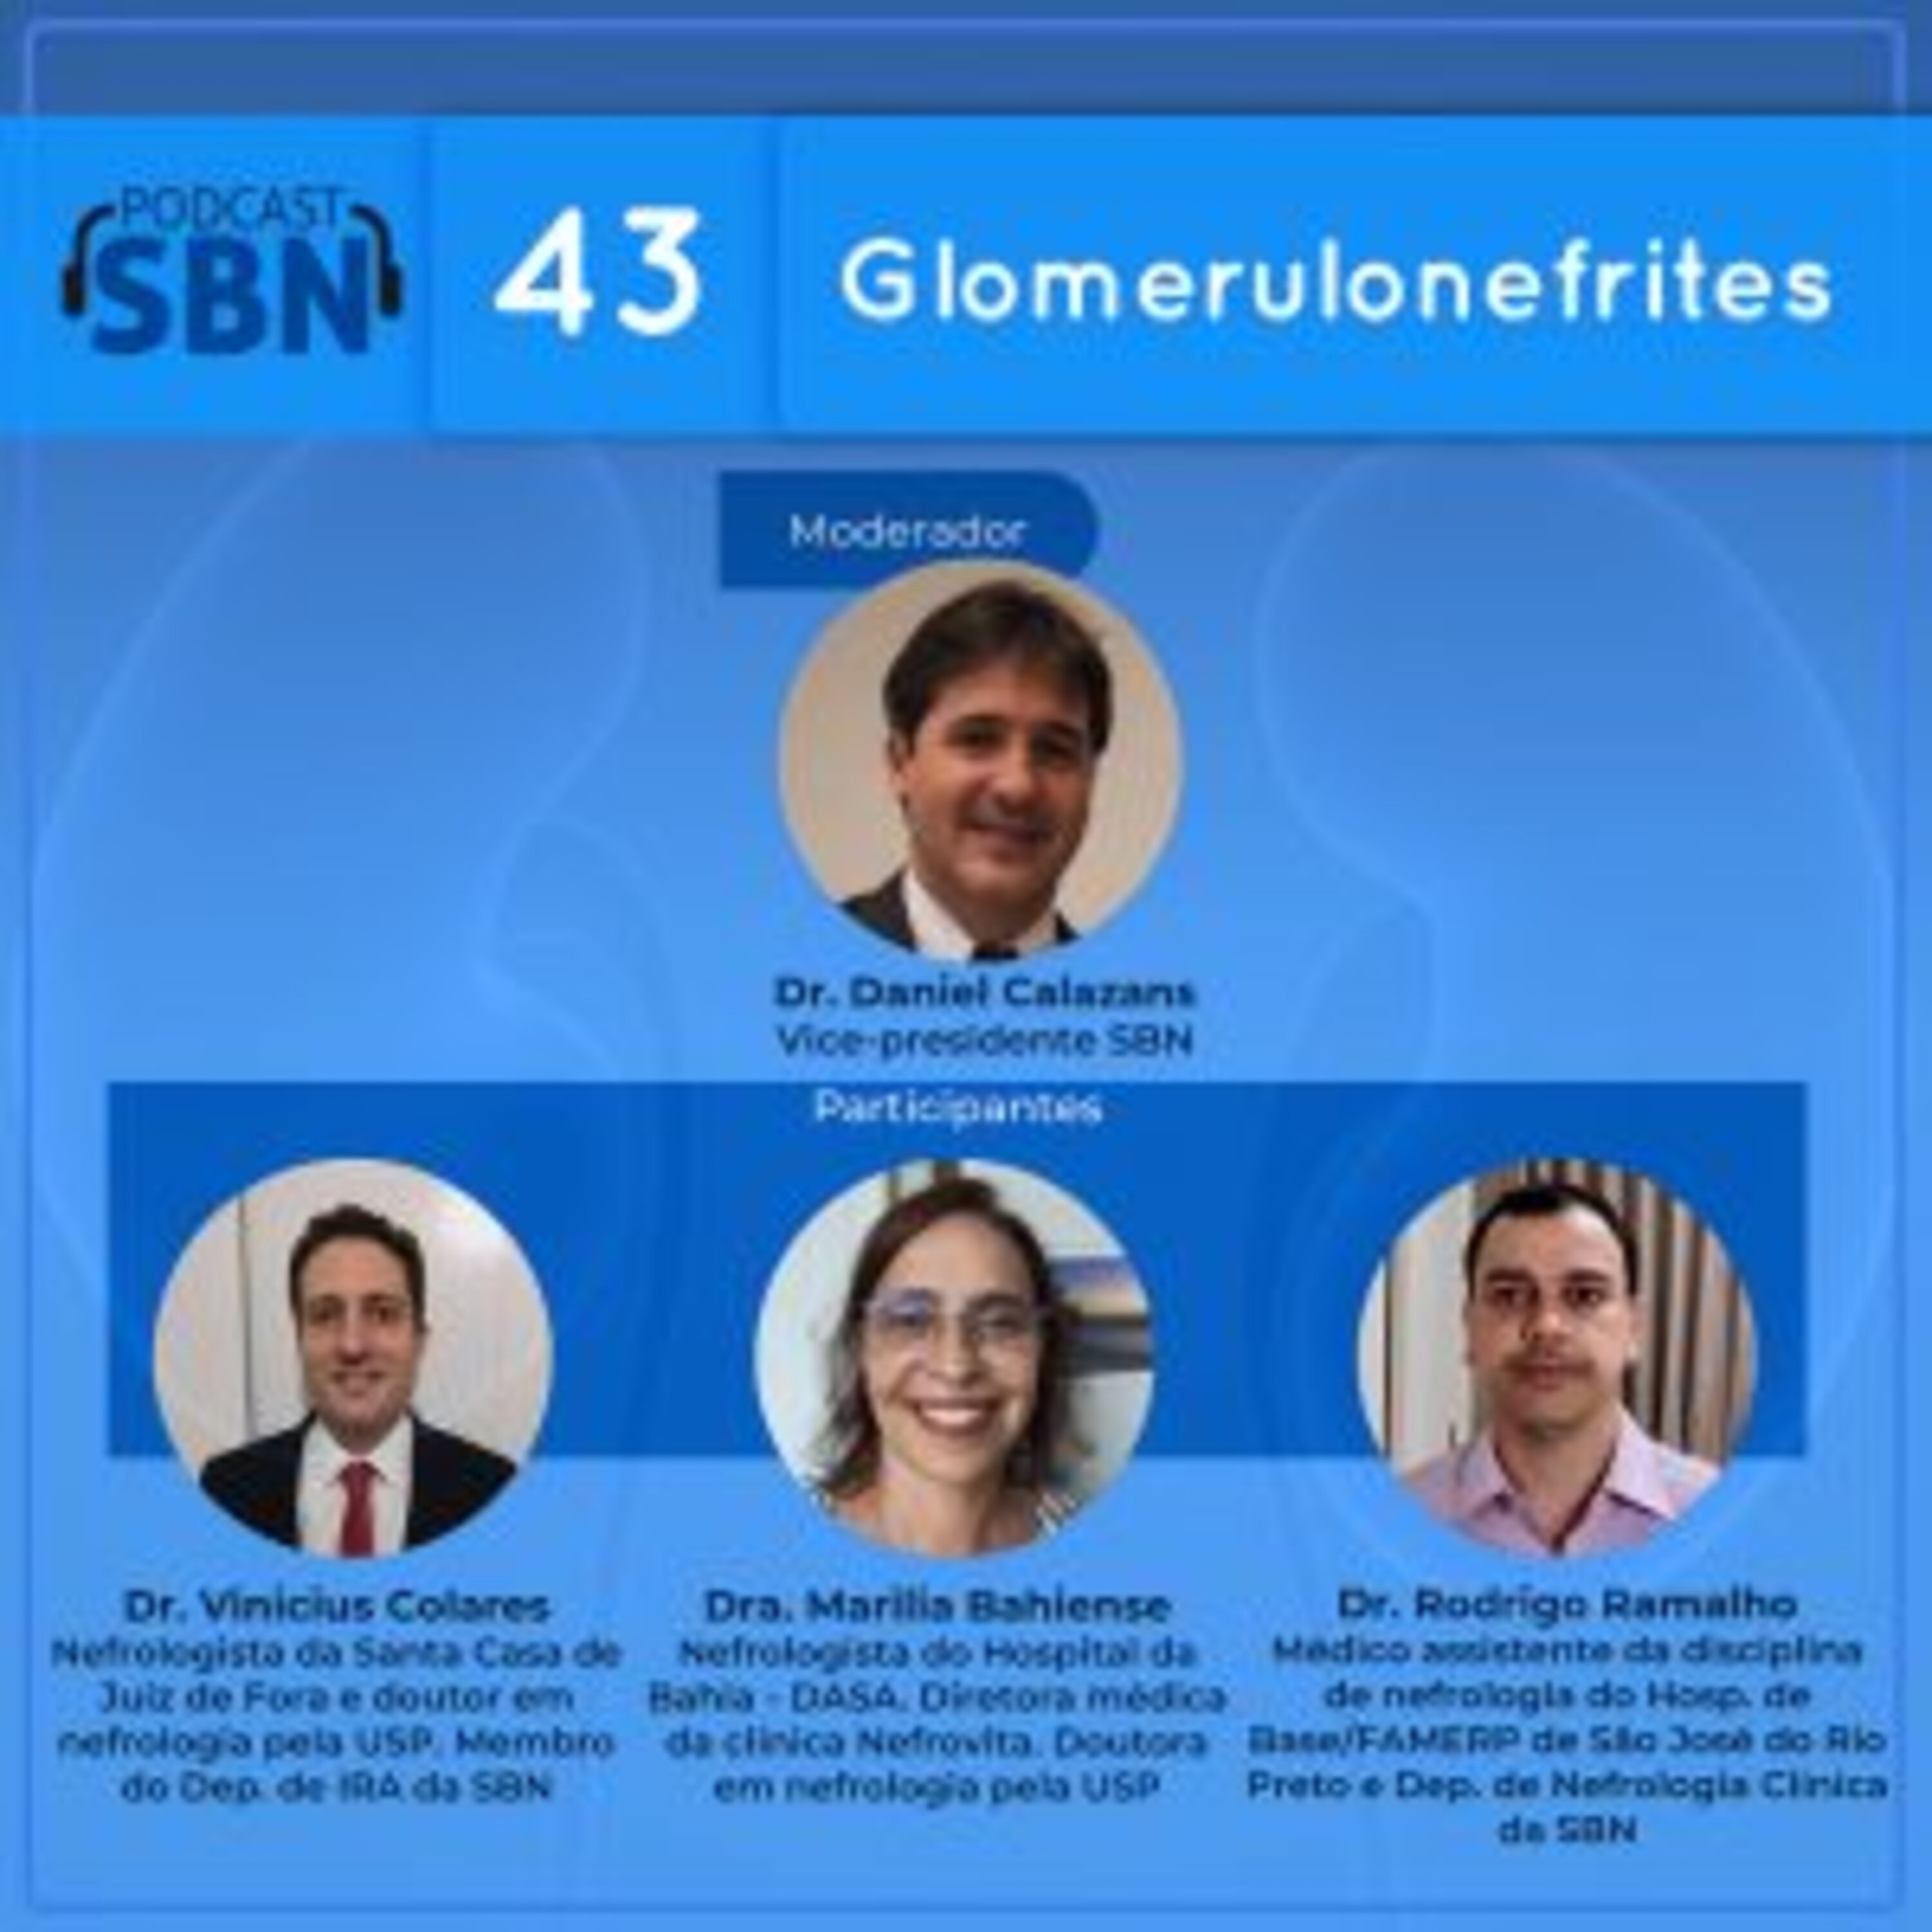 Glomerulonefrite (SBN #43)